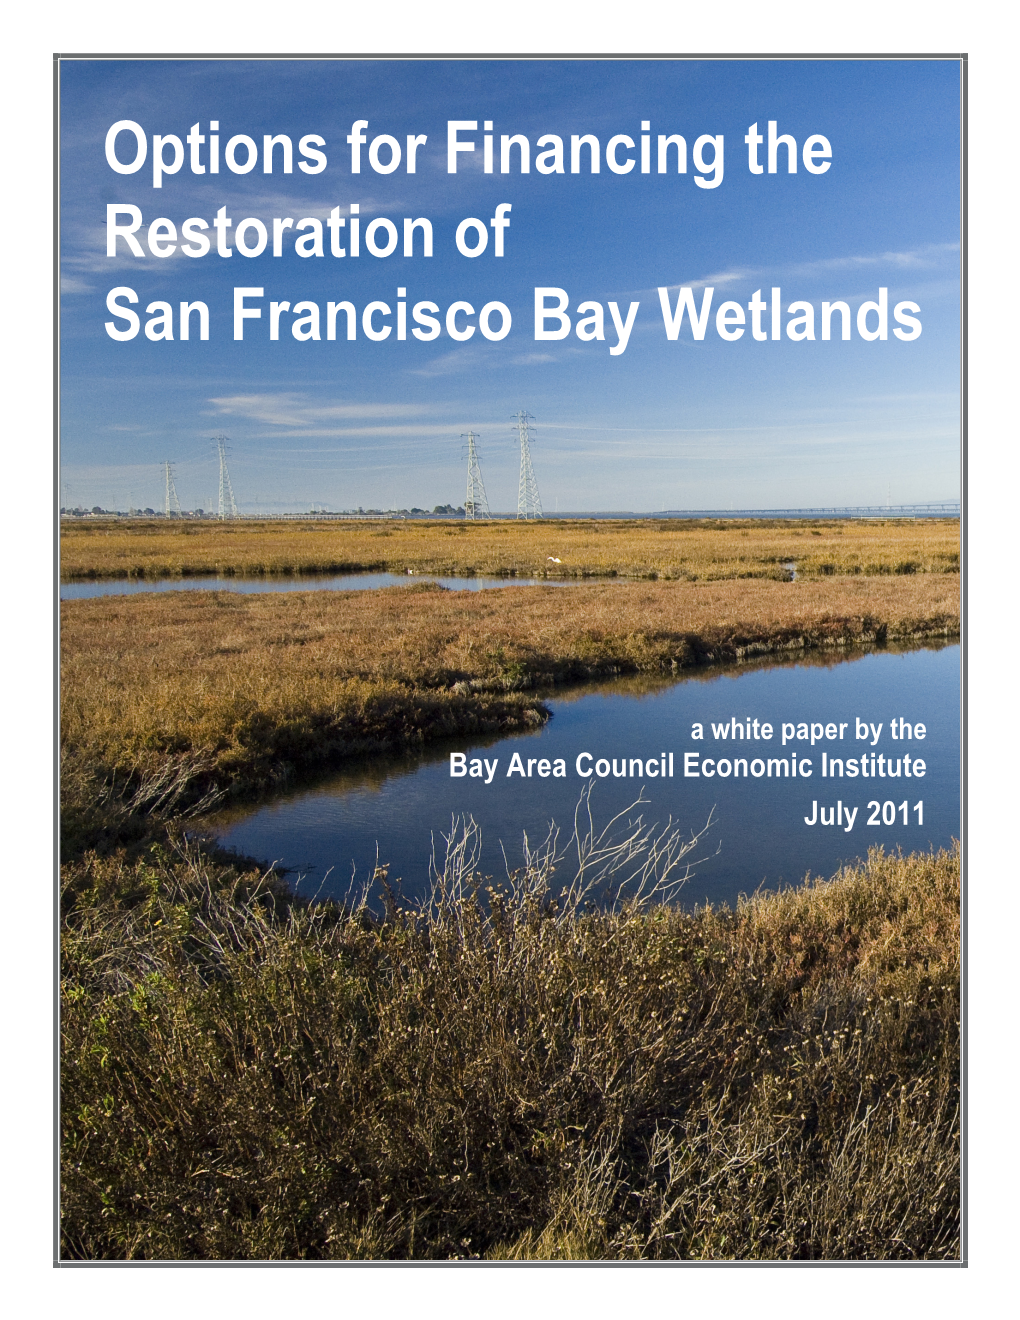 Financing Wetland Restoration in San Francisco Bay Save the Bay, 2007